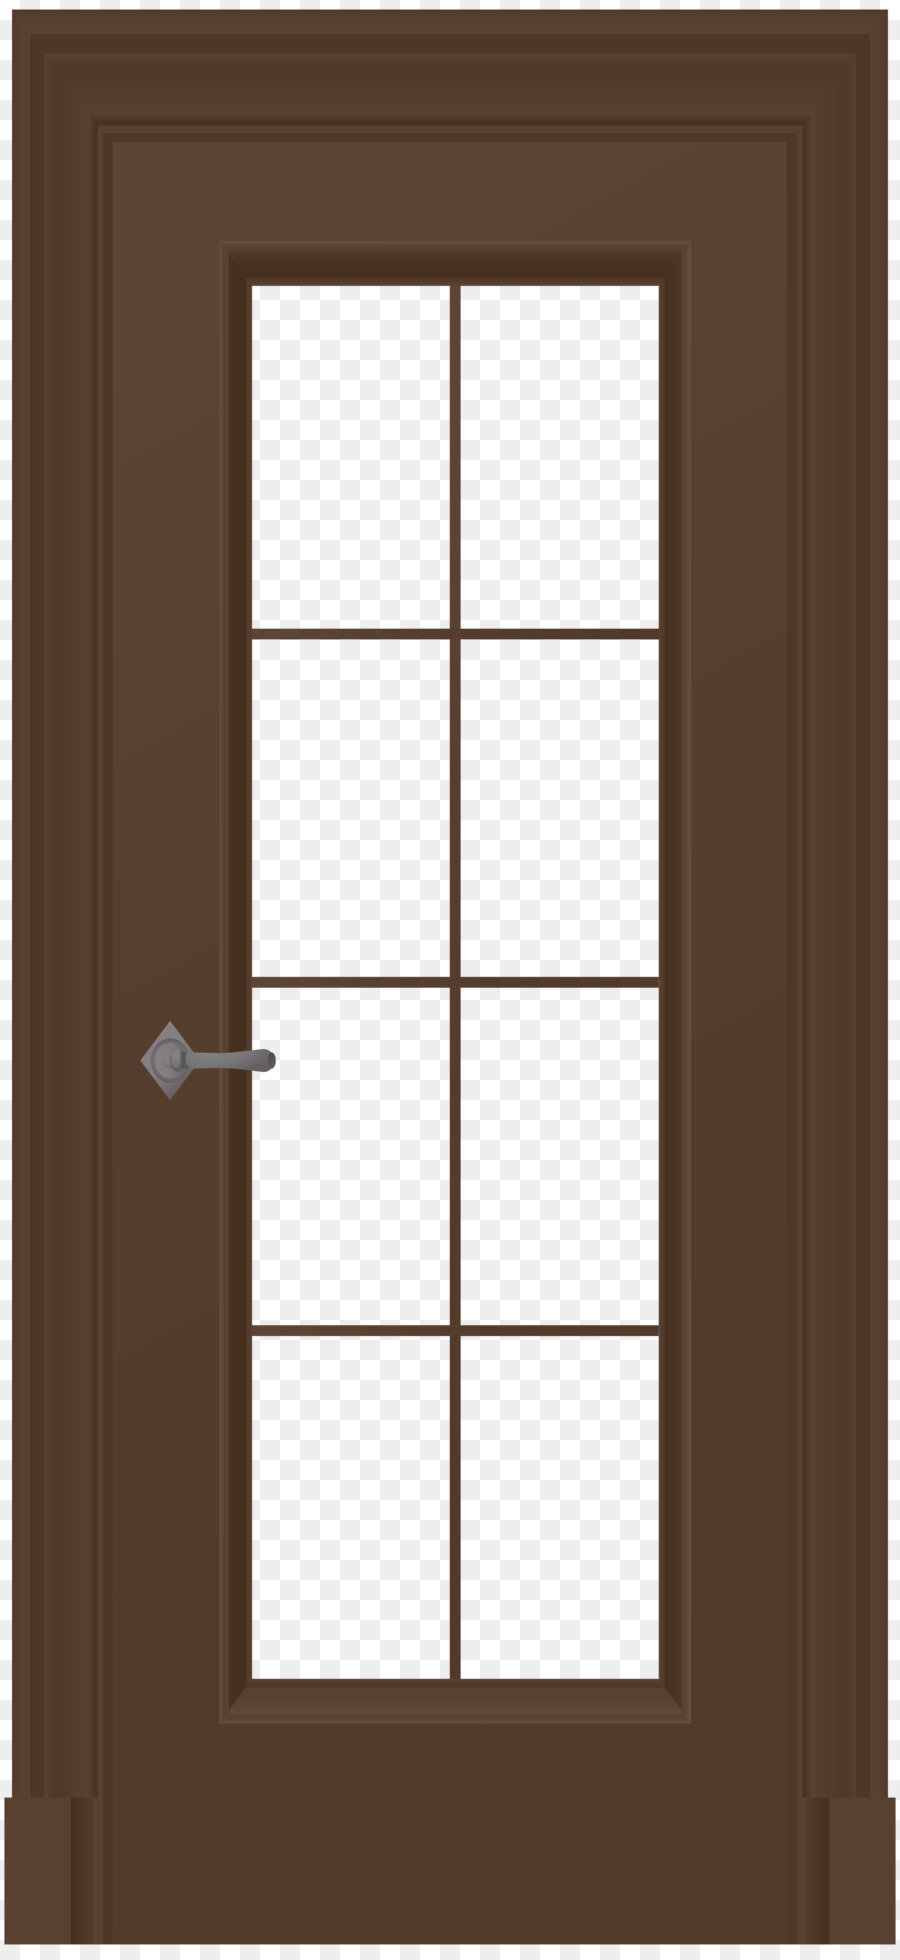 Tür Clip art - Dekorative Türen